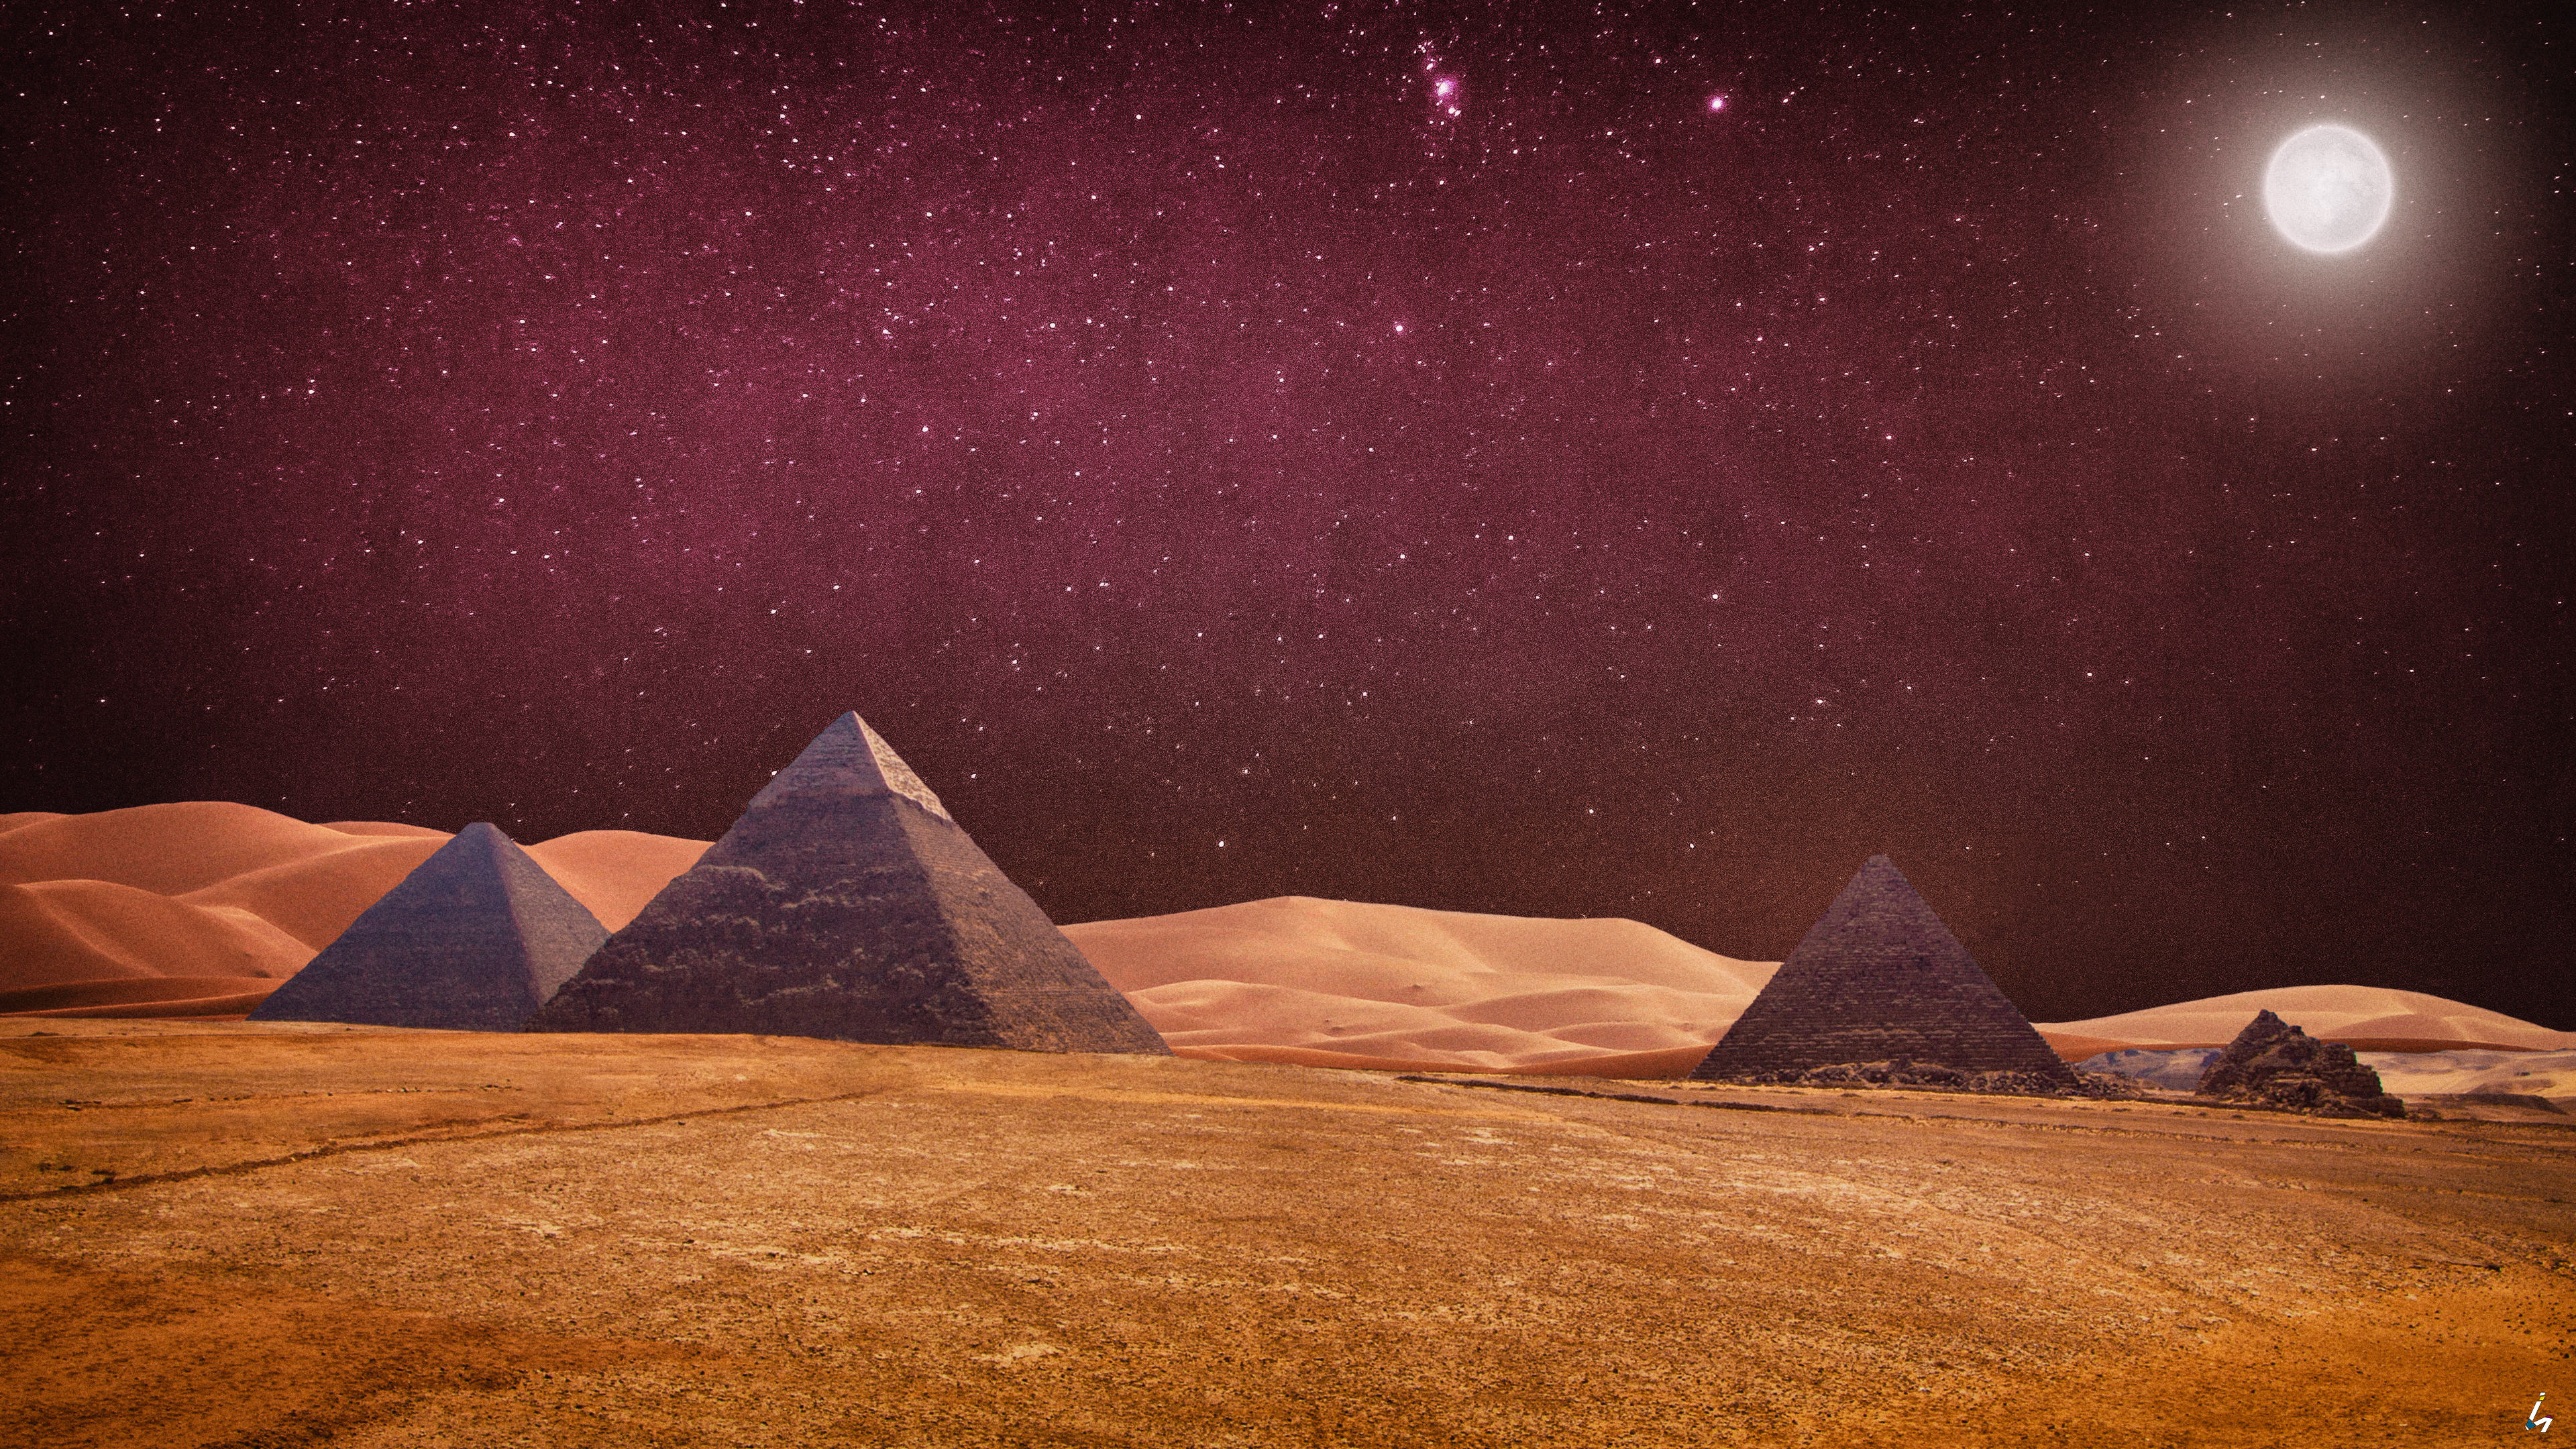 General 3840x2160 desert pyramid effects digital art CGI photoshopped landscape night stars Moon